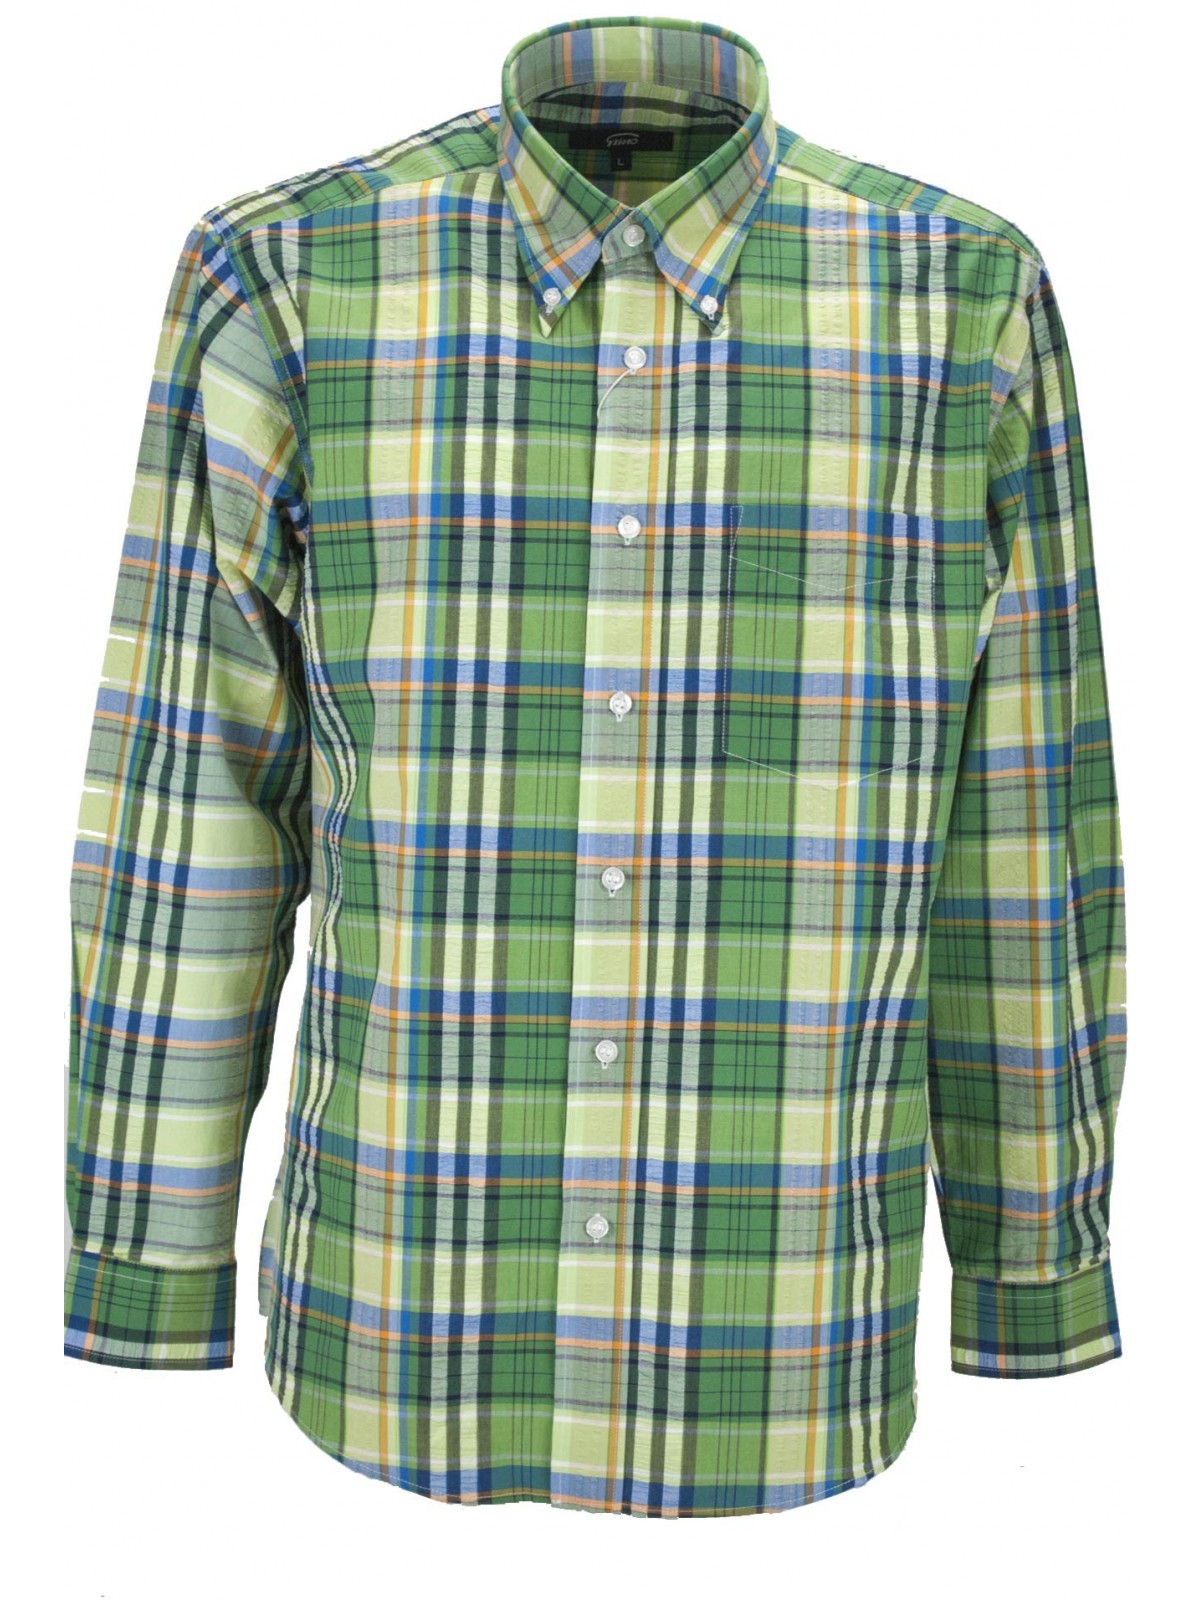 Klassisches Herrenhemd Popeline mit grünem Karomuster - Button Down - Grino